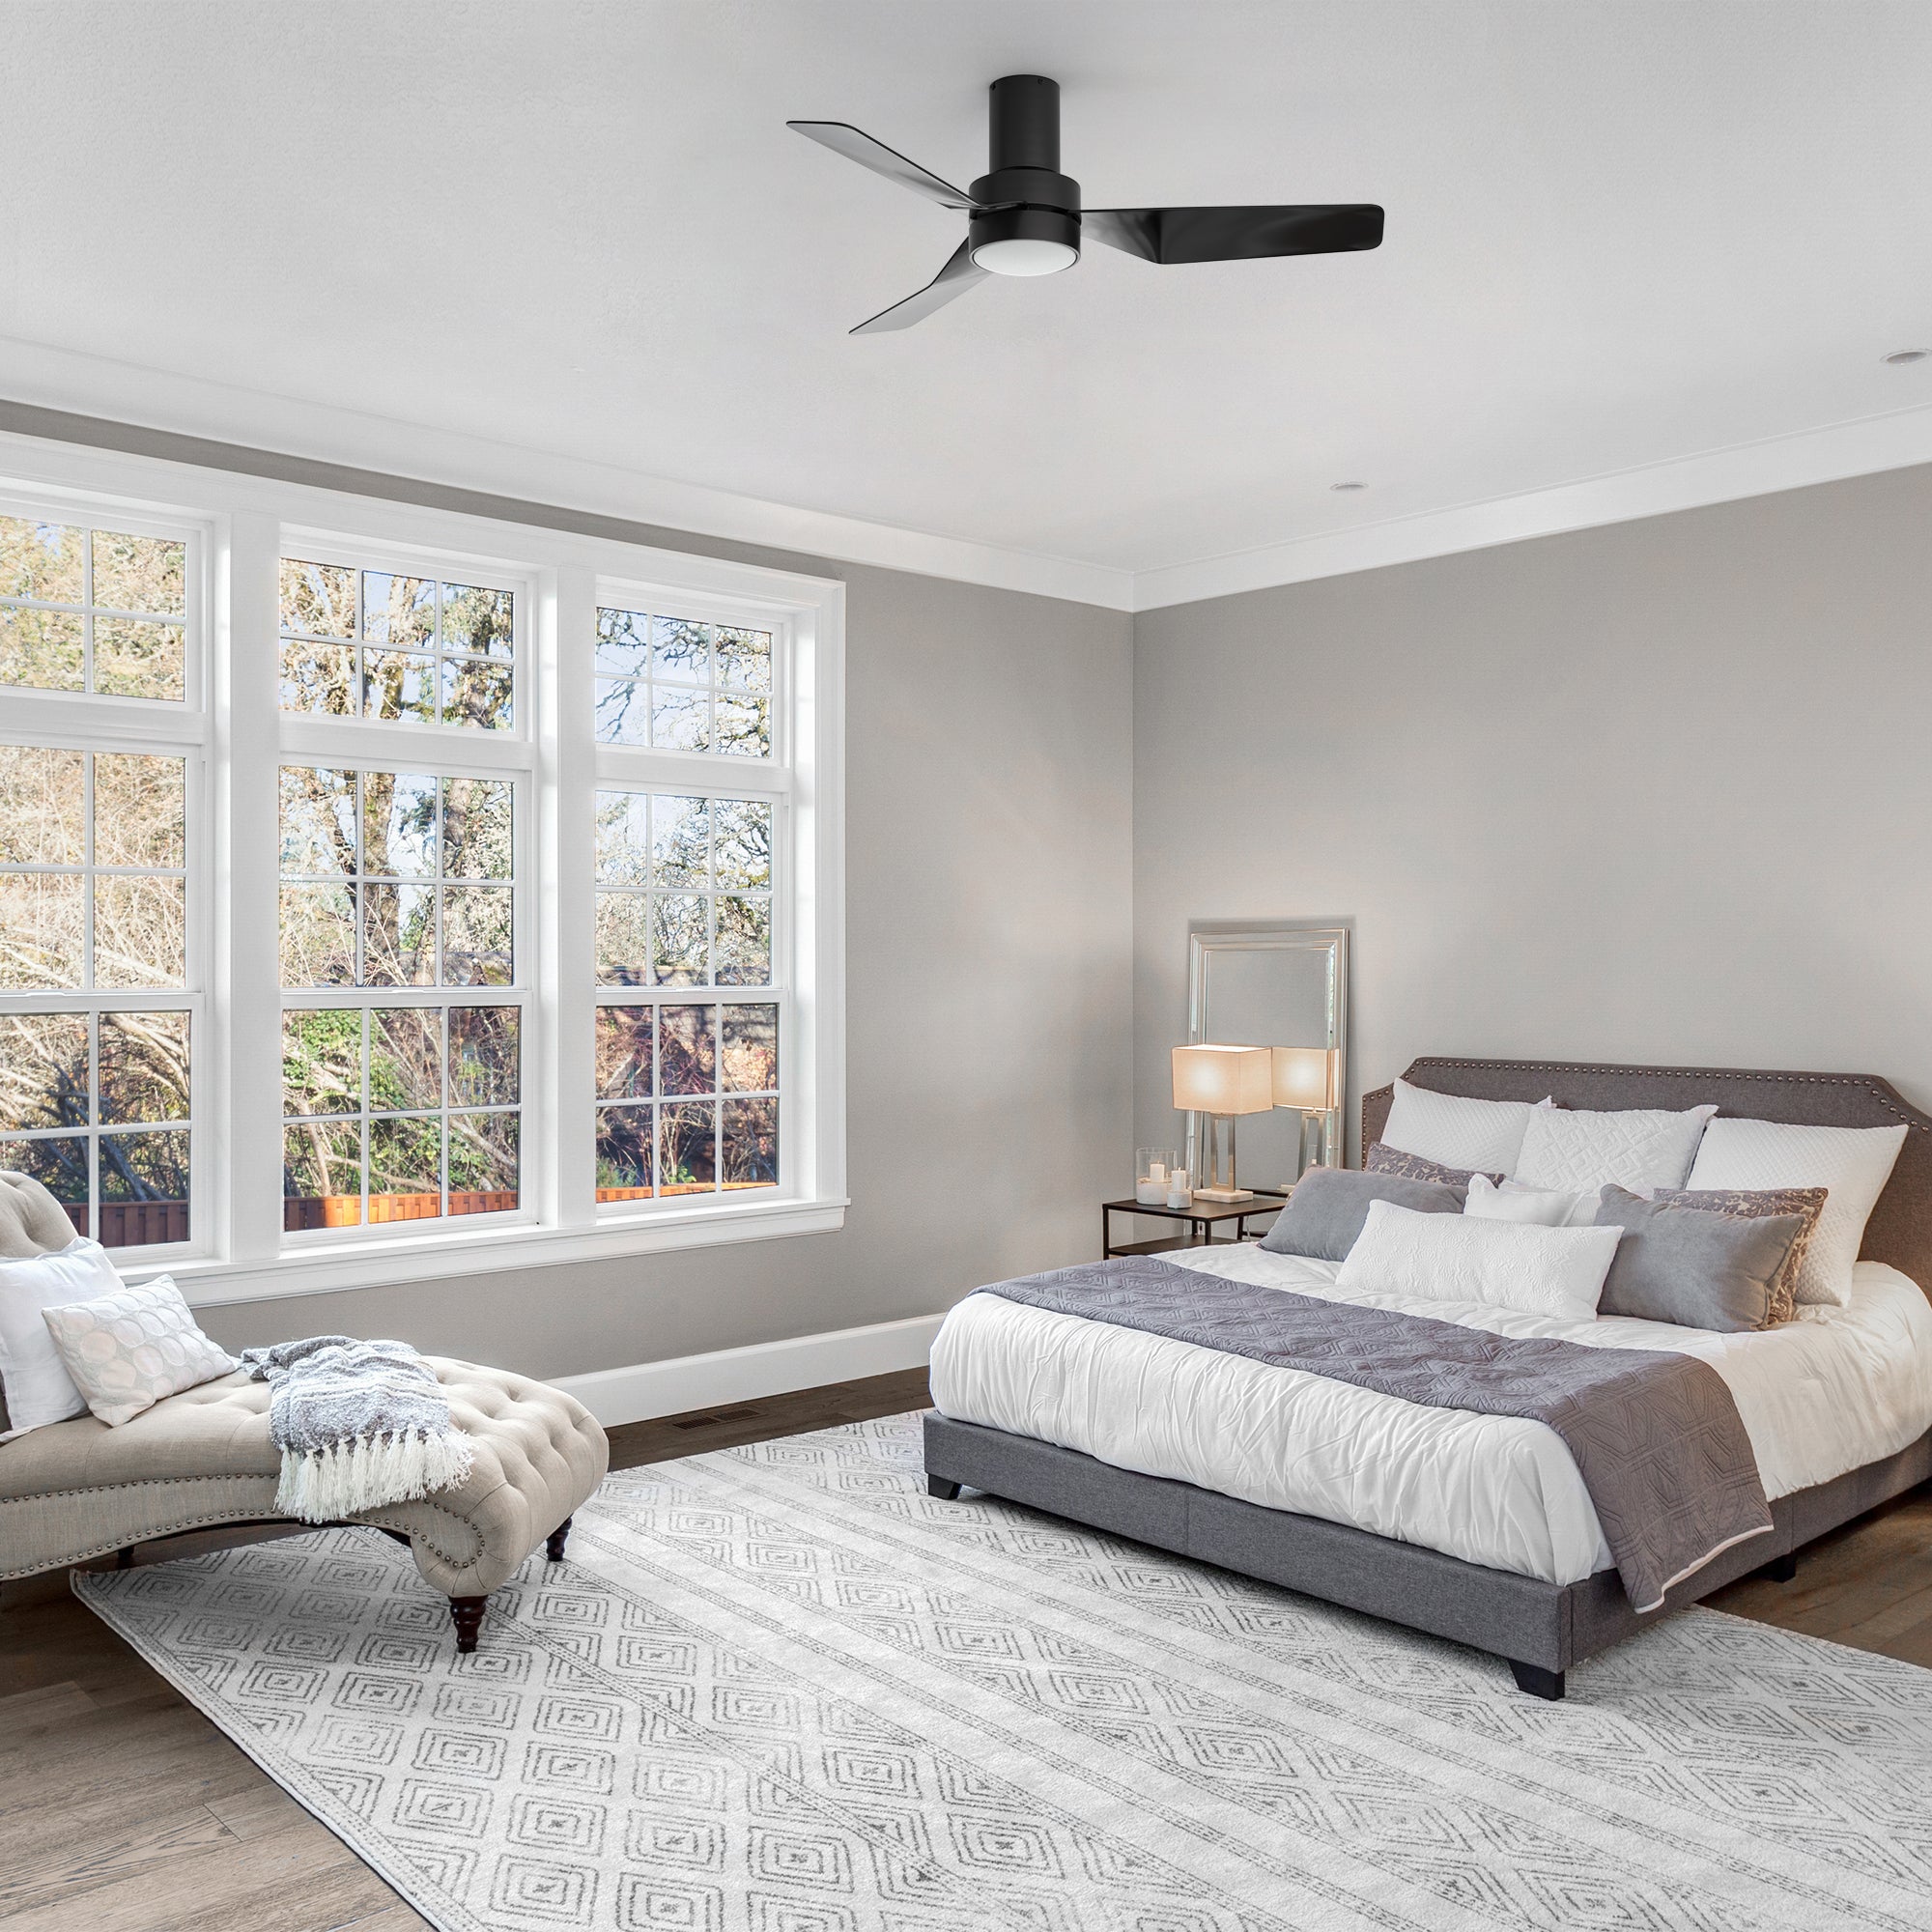 44 inch Smart indoor Ceiling Fan is suitable for decorating bedroom. 